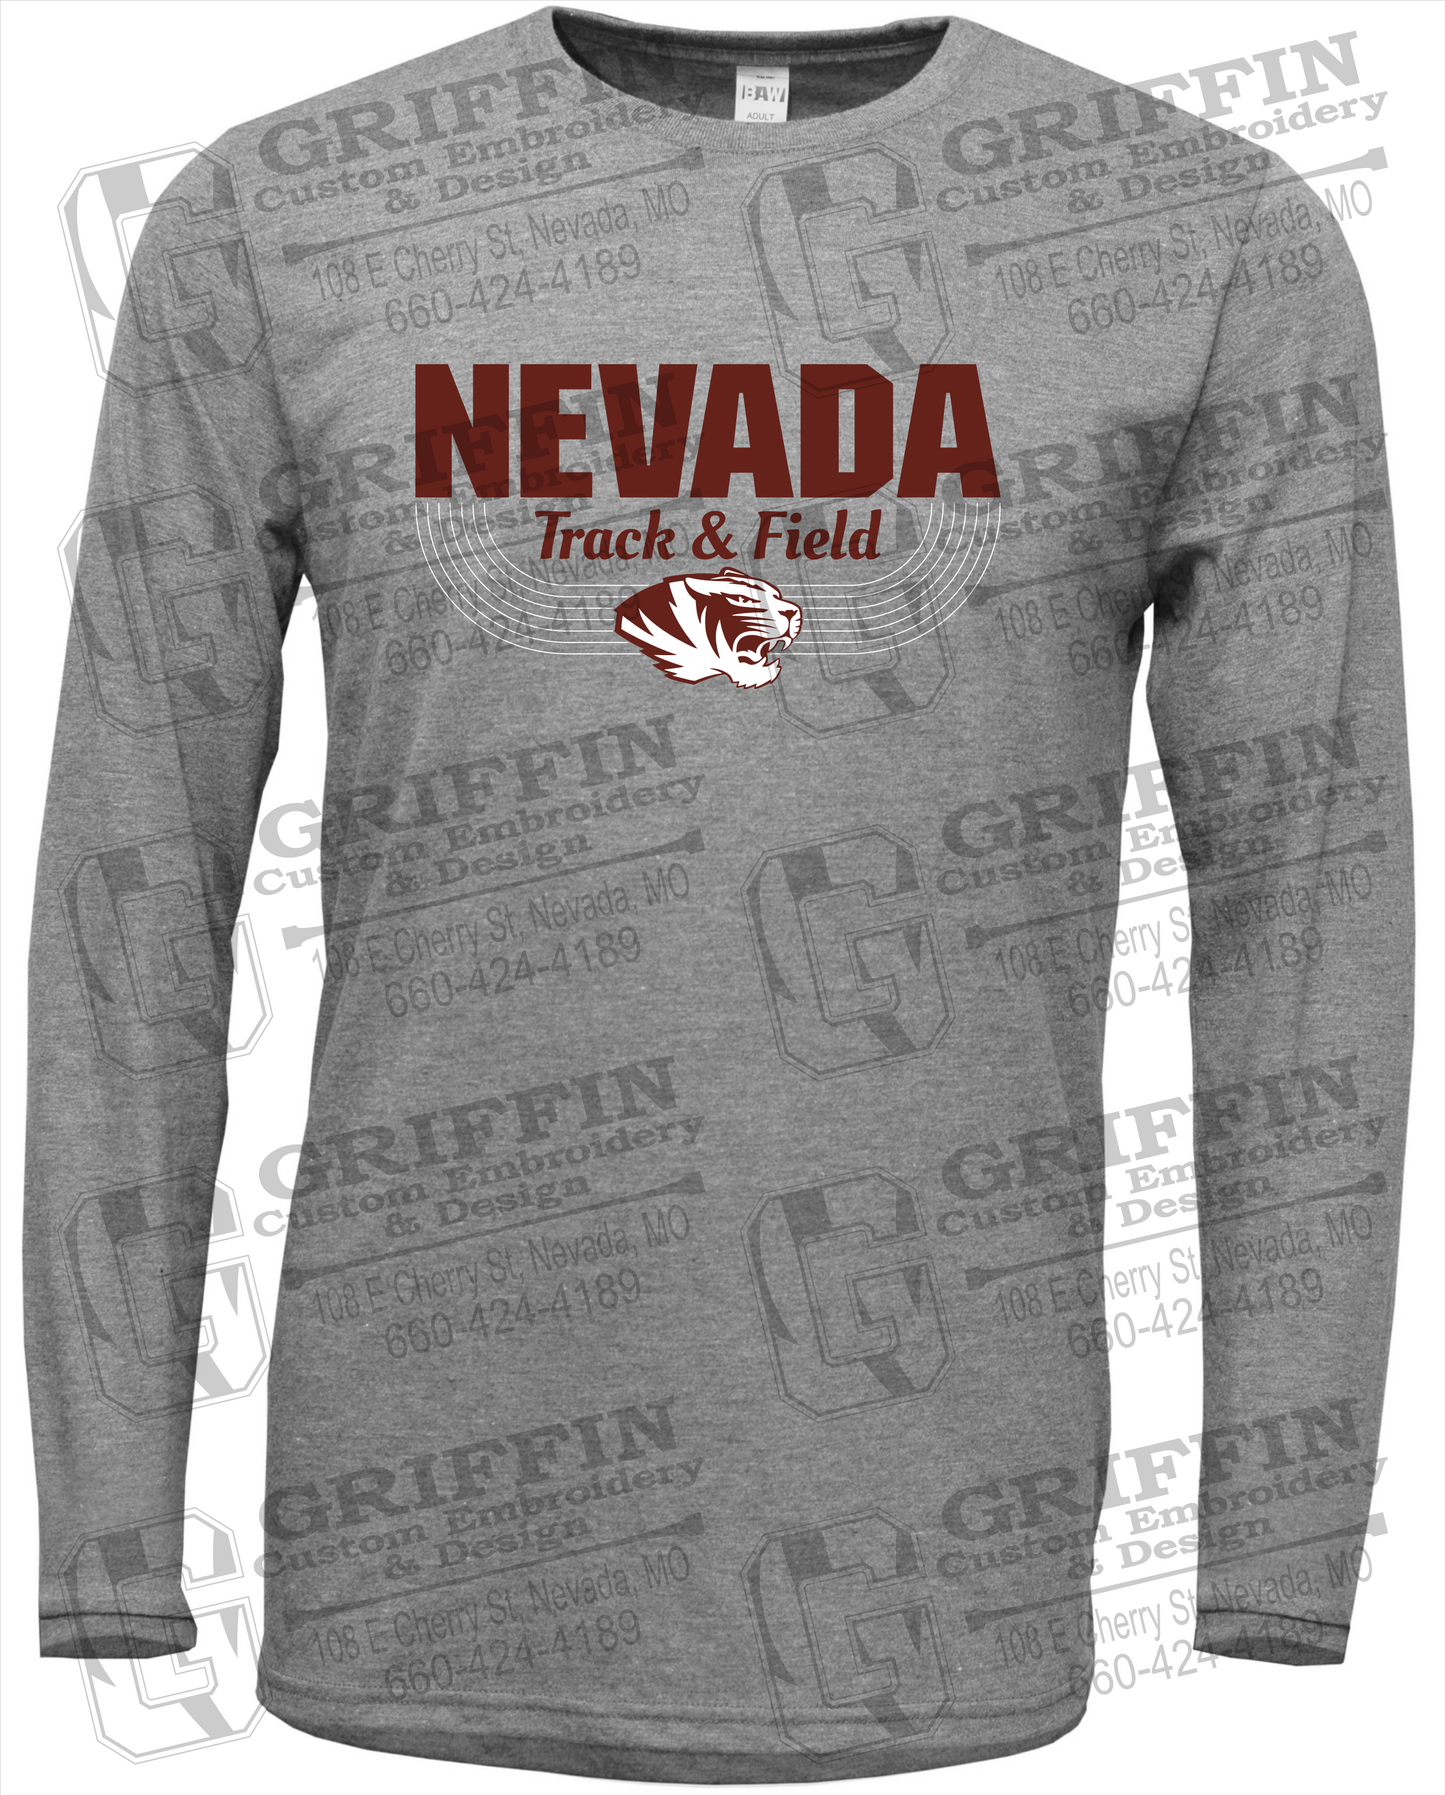 Soft-Tek Long Sleeve T-Shirt - Track & Field - Nevada Tigers 24-R